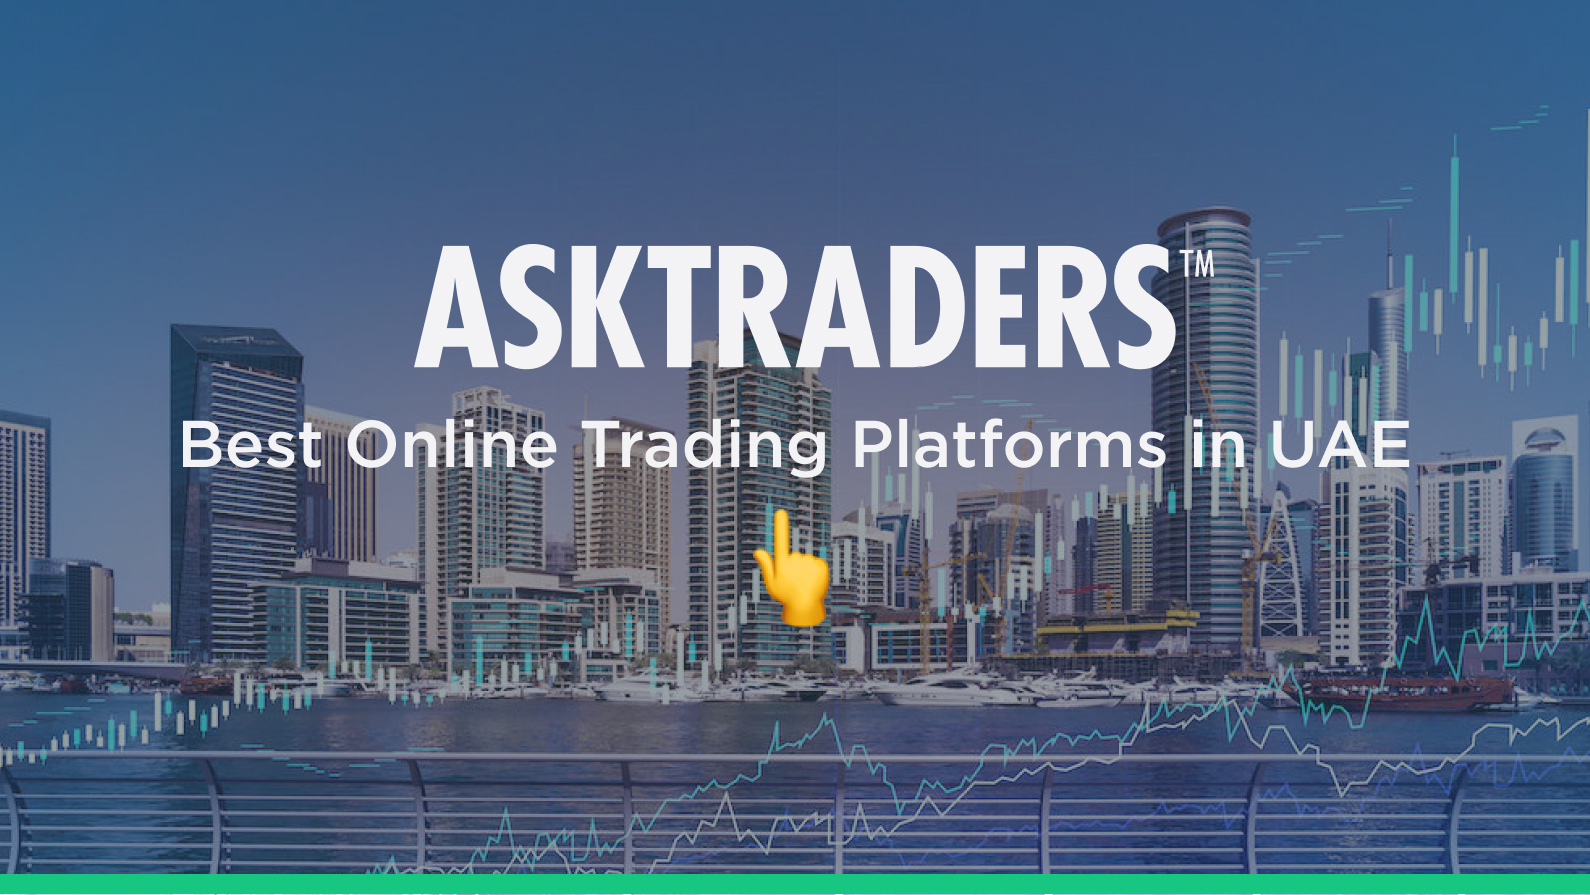 Best trading platform oman